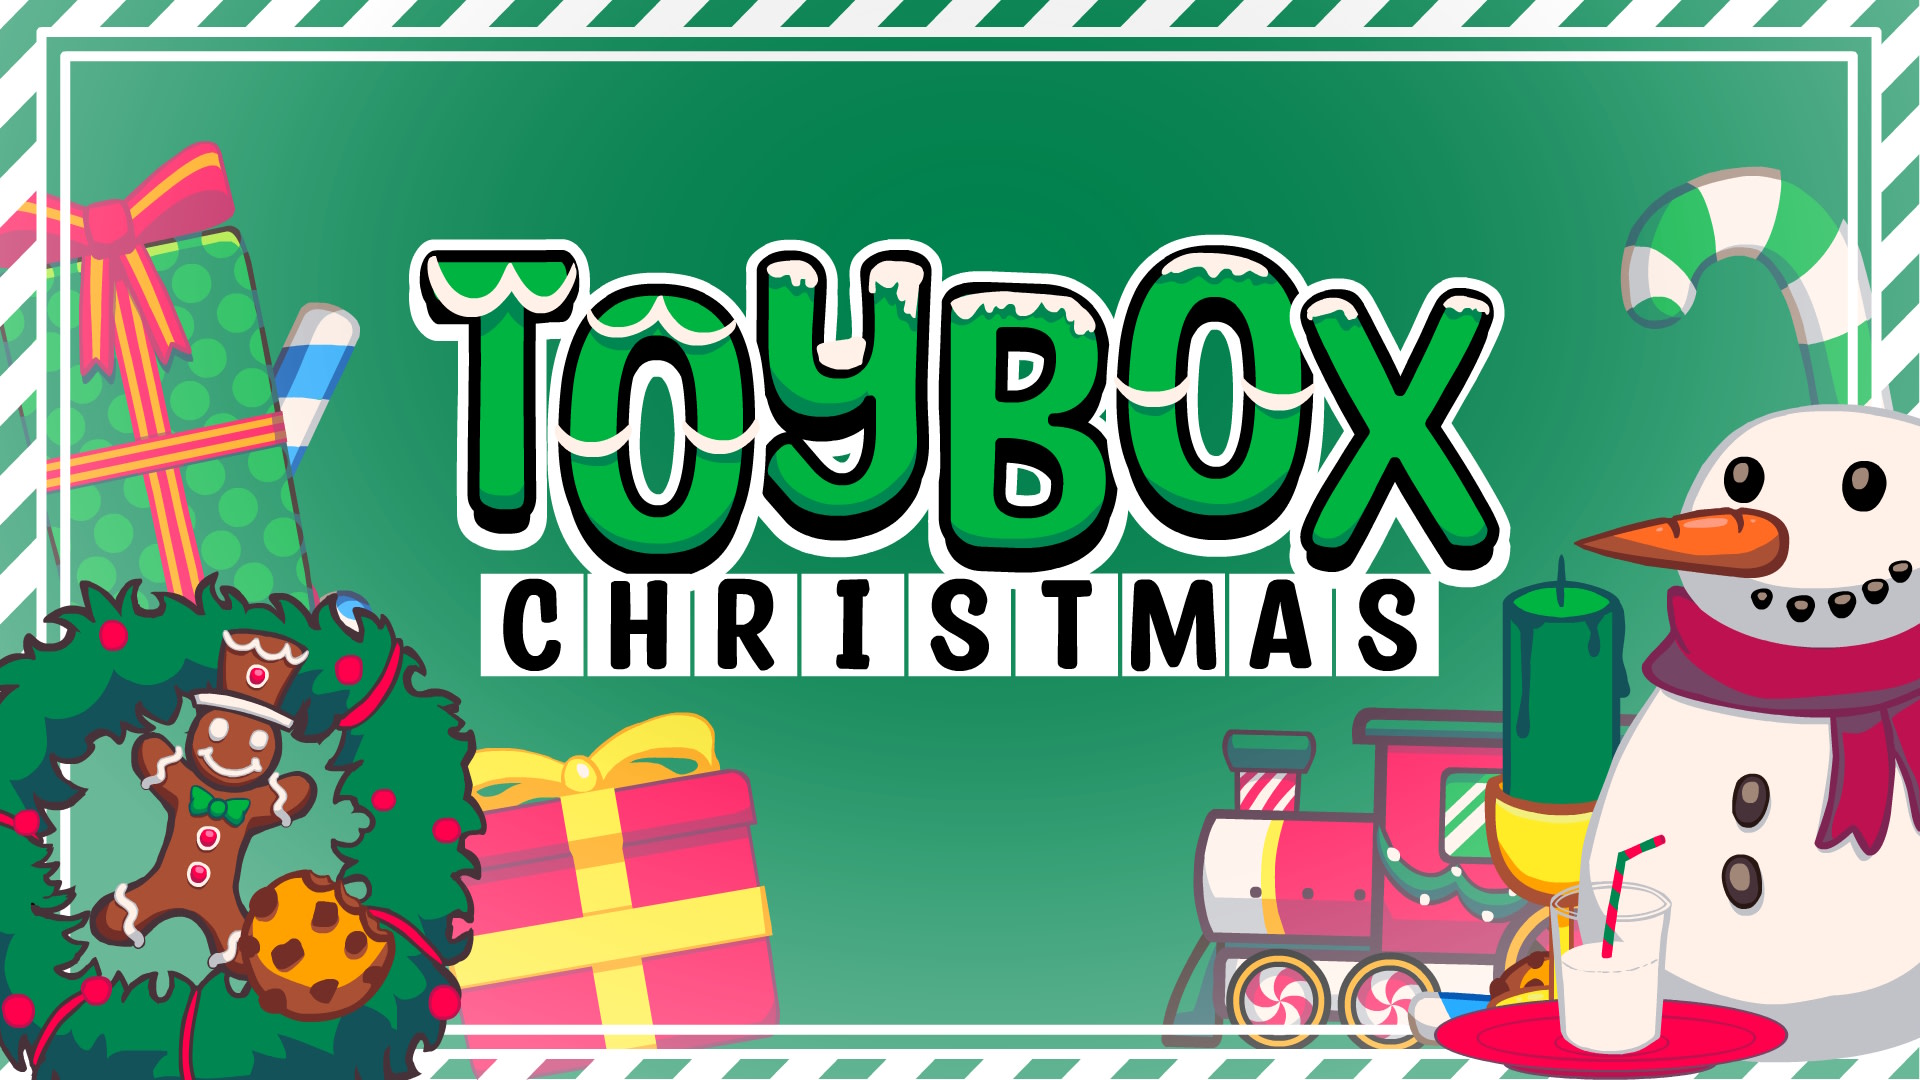 ToyBox Christmas